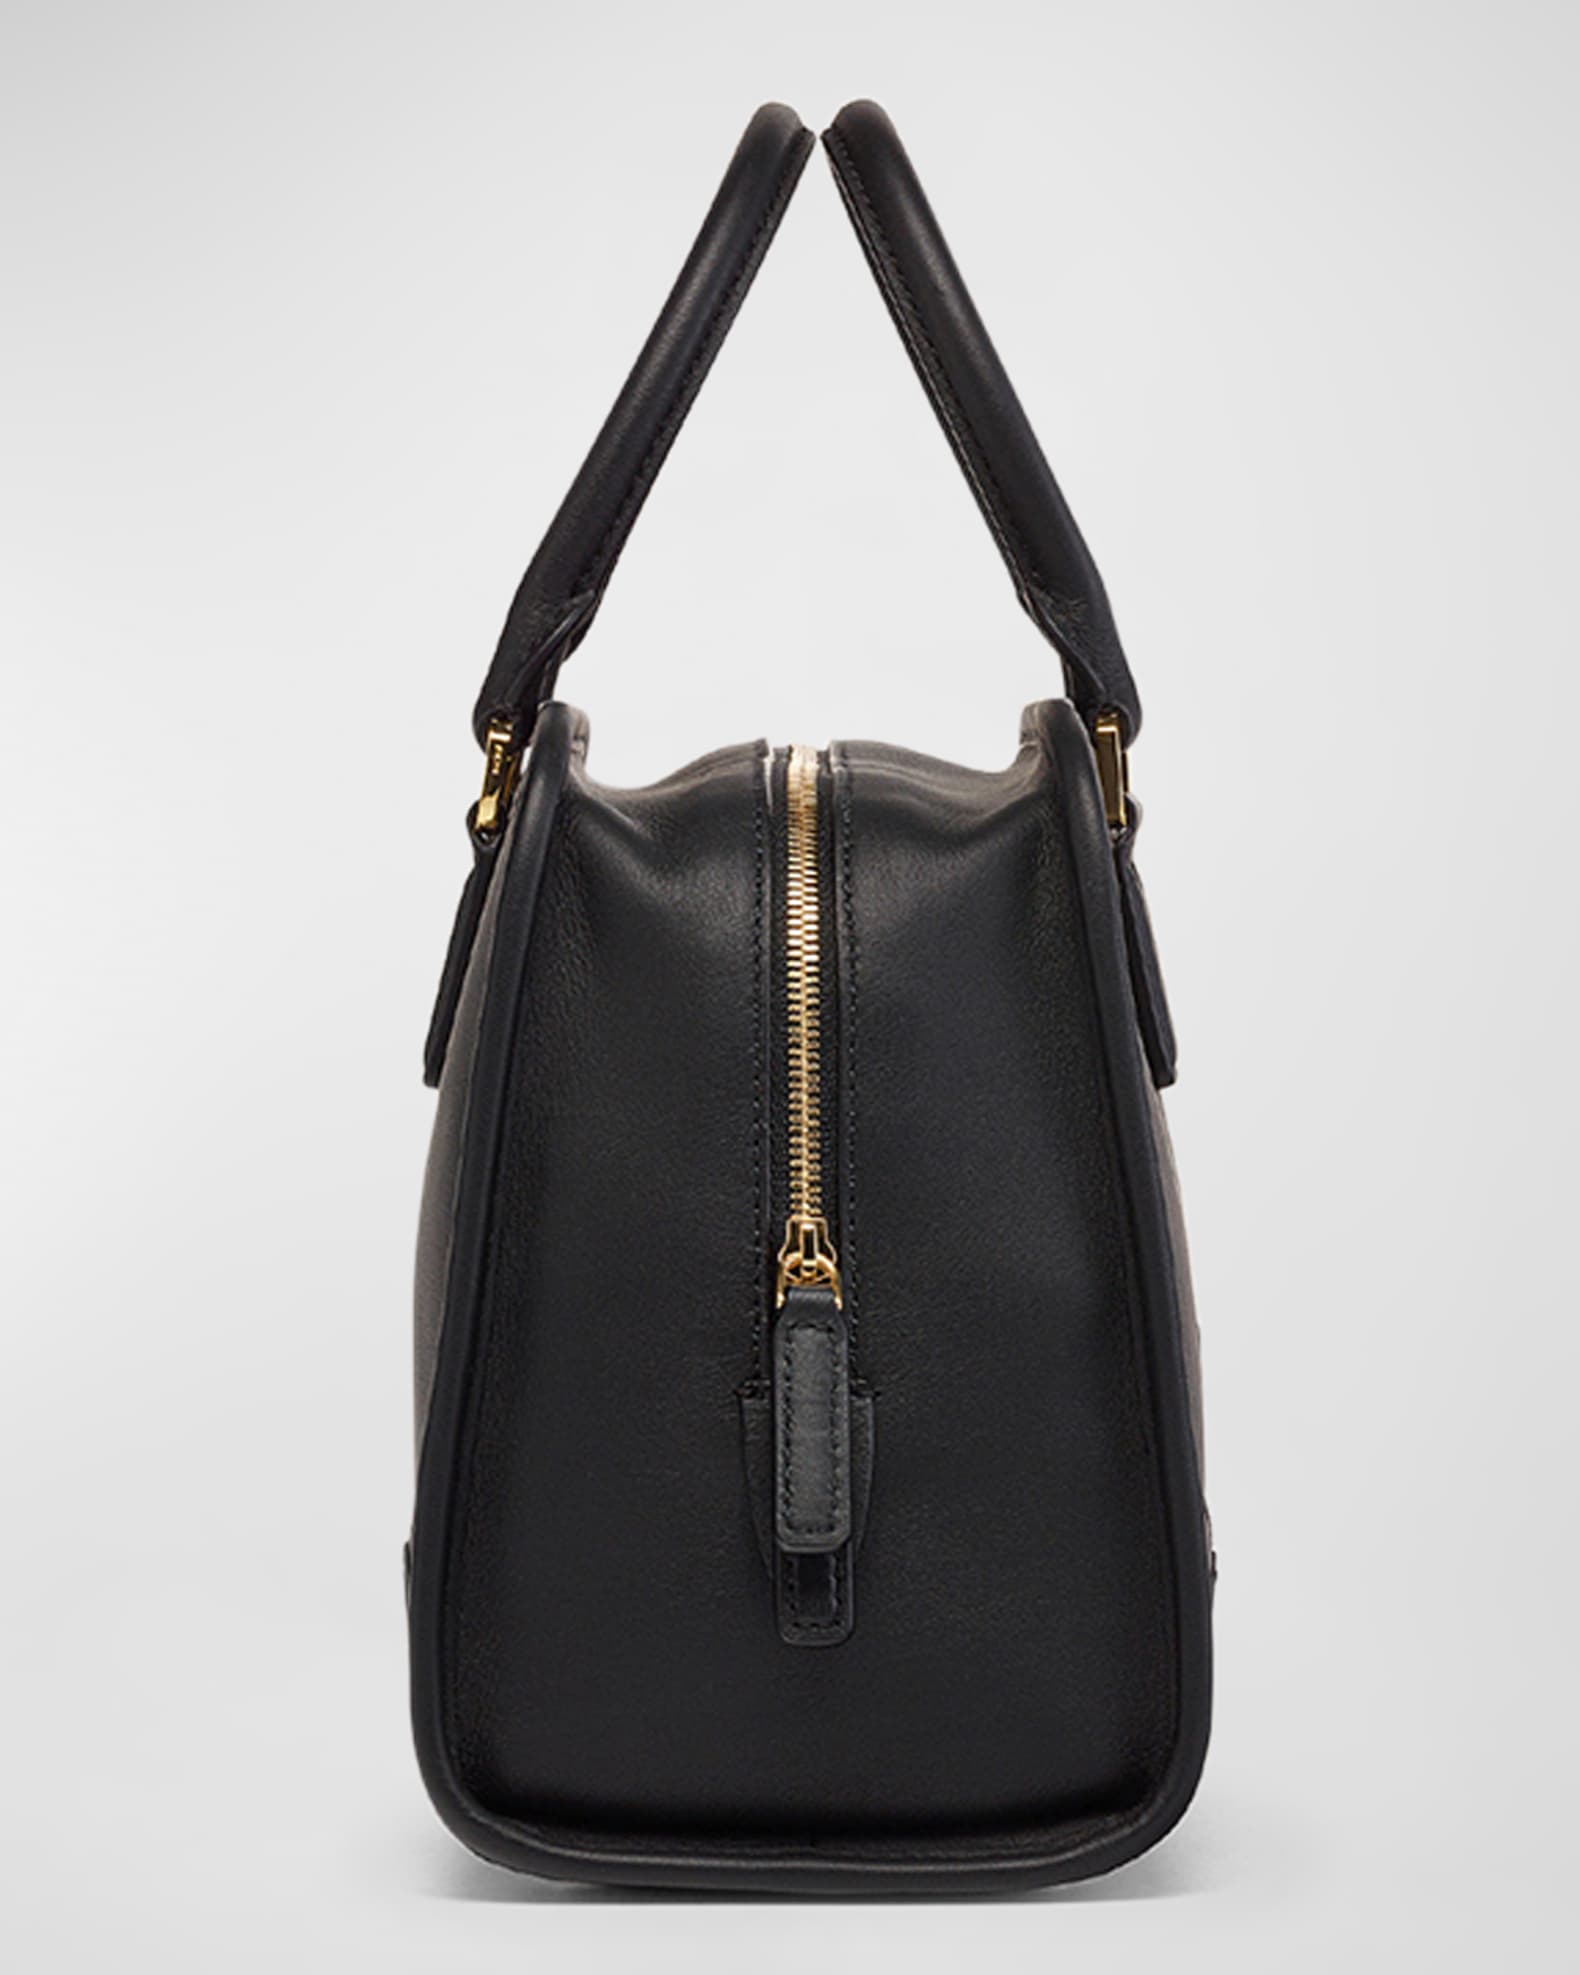 Boston leather handbag MCM Black in Leather - 33472057